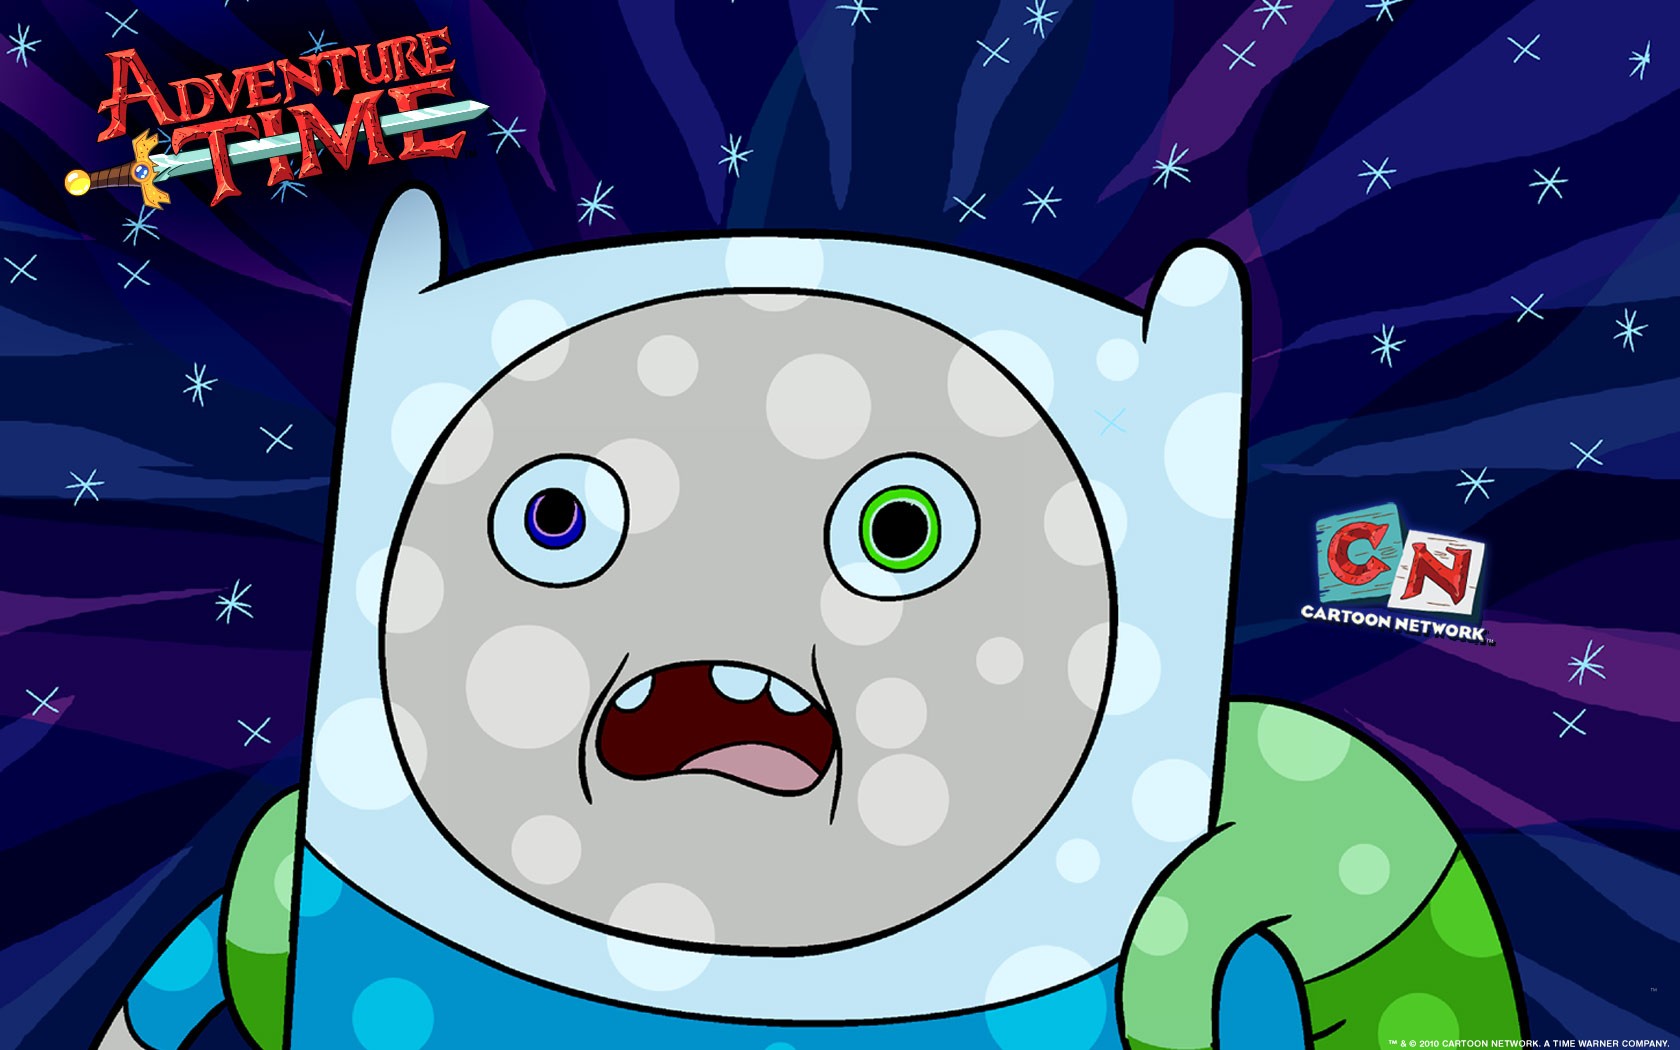 General 1680x1050 Adventure Time Cartoon Network cartoon Finn the Human TV series digital art closeup